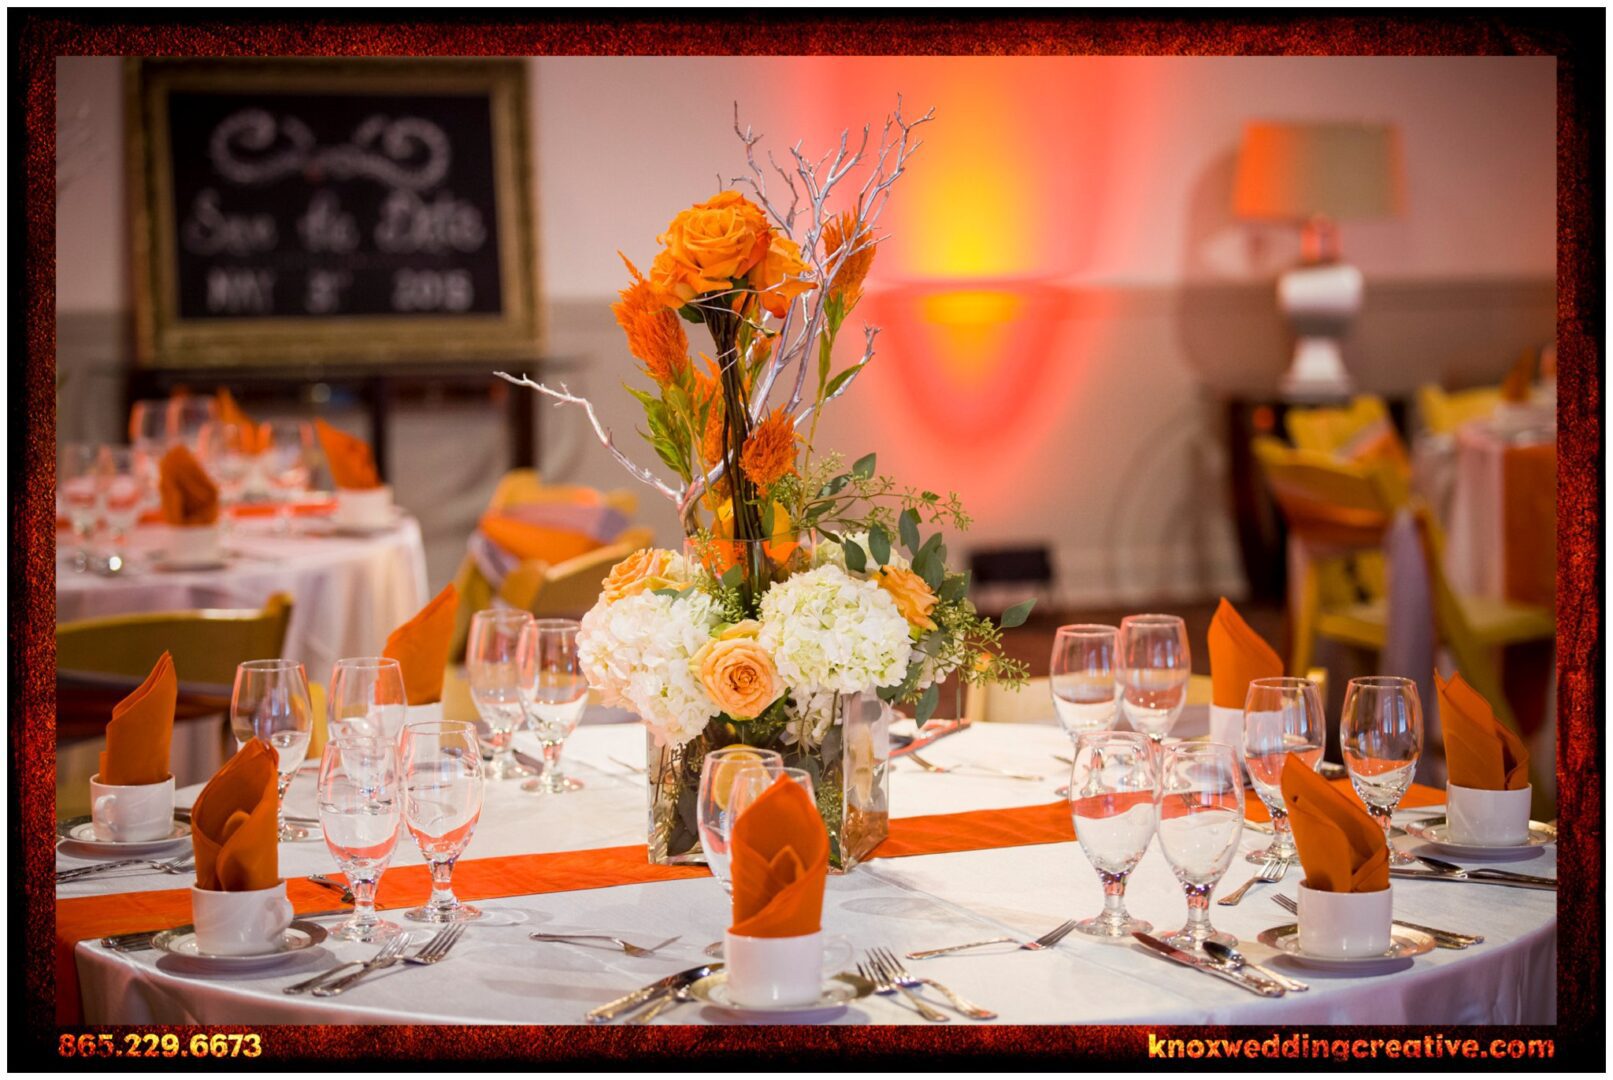 knoxville-wedding-florist-rothchild-orange-flowers_5155.jpg